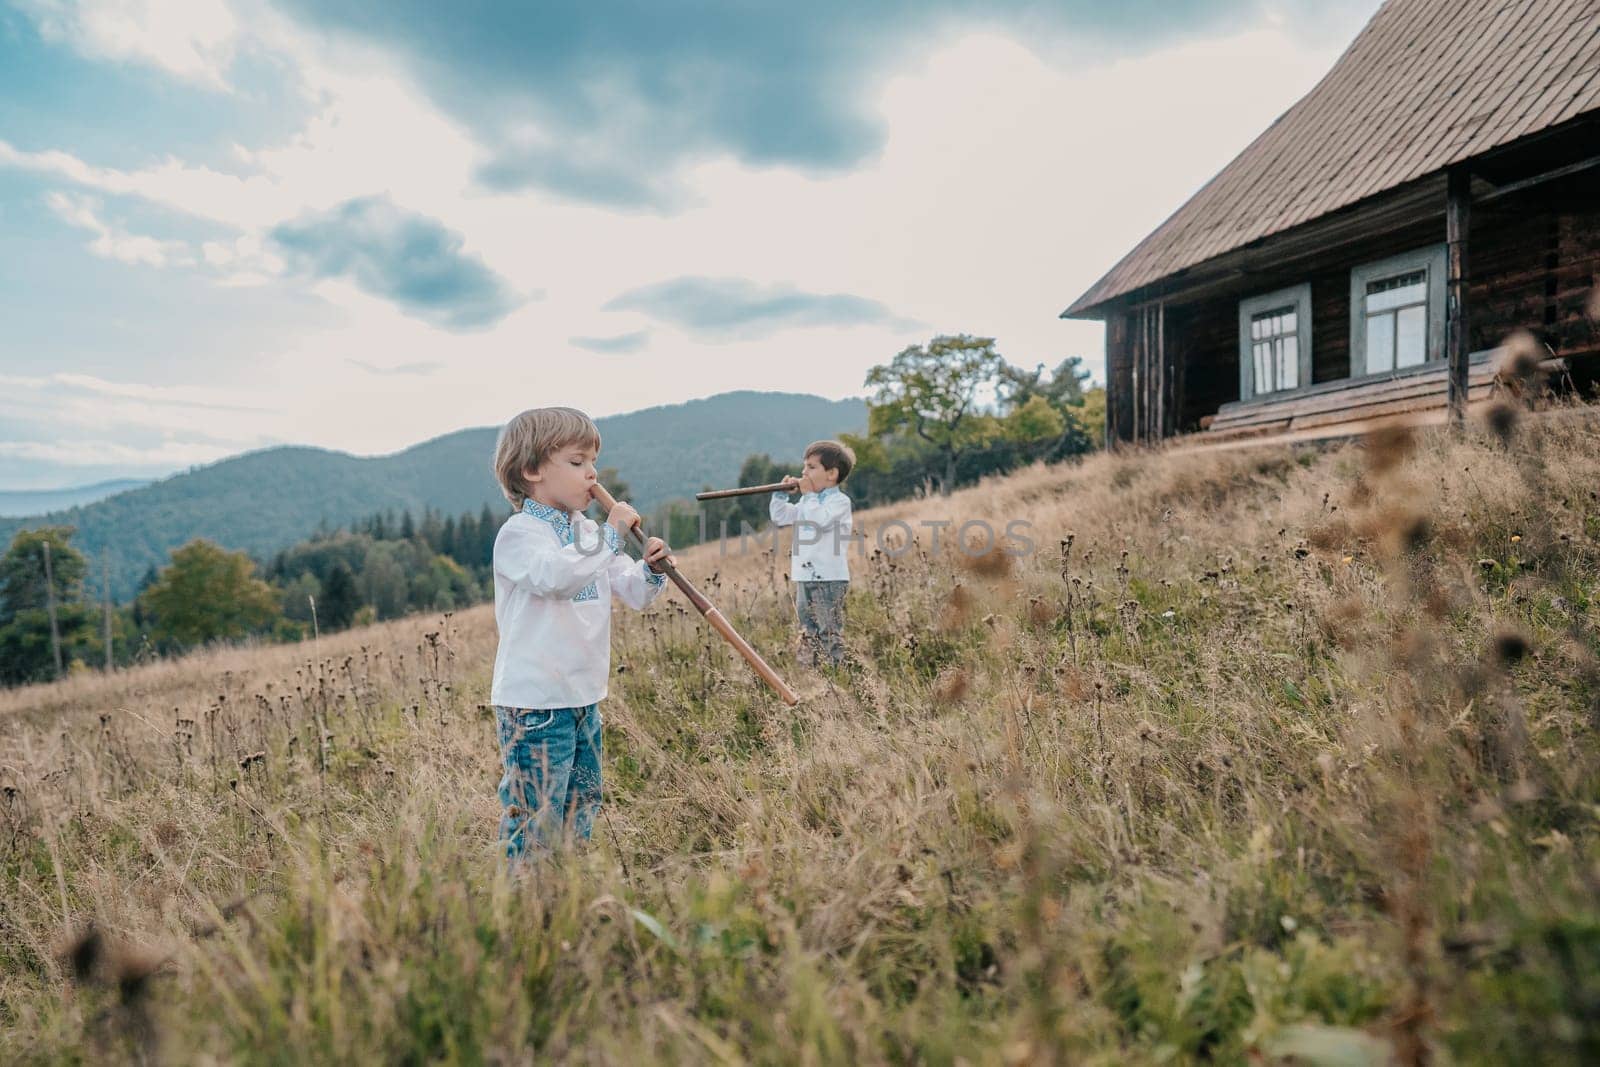 Little boys playing on flutes - ukrainian sopilka on meadow Carpathian mountain by kristina_kokhanova